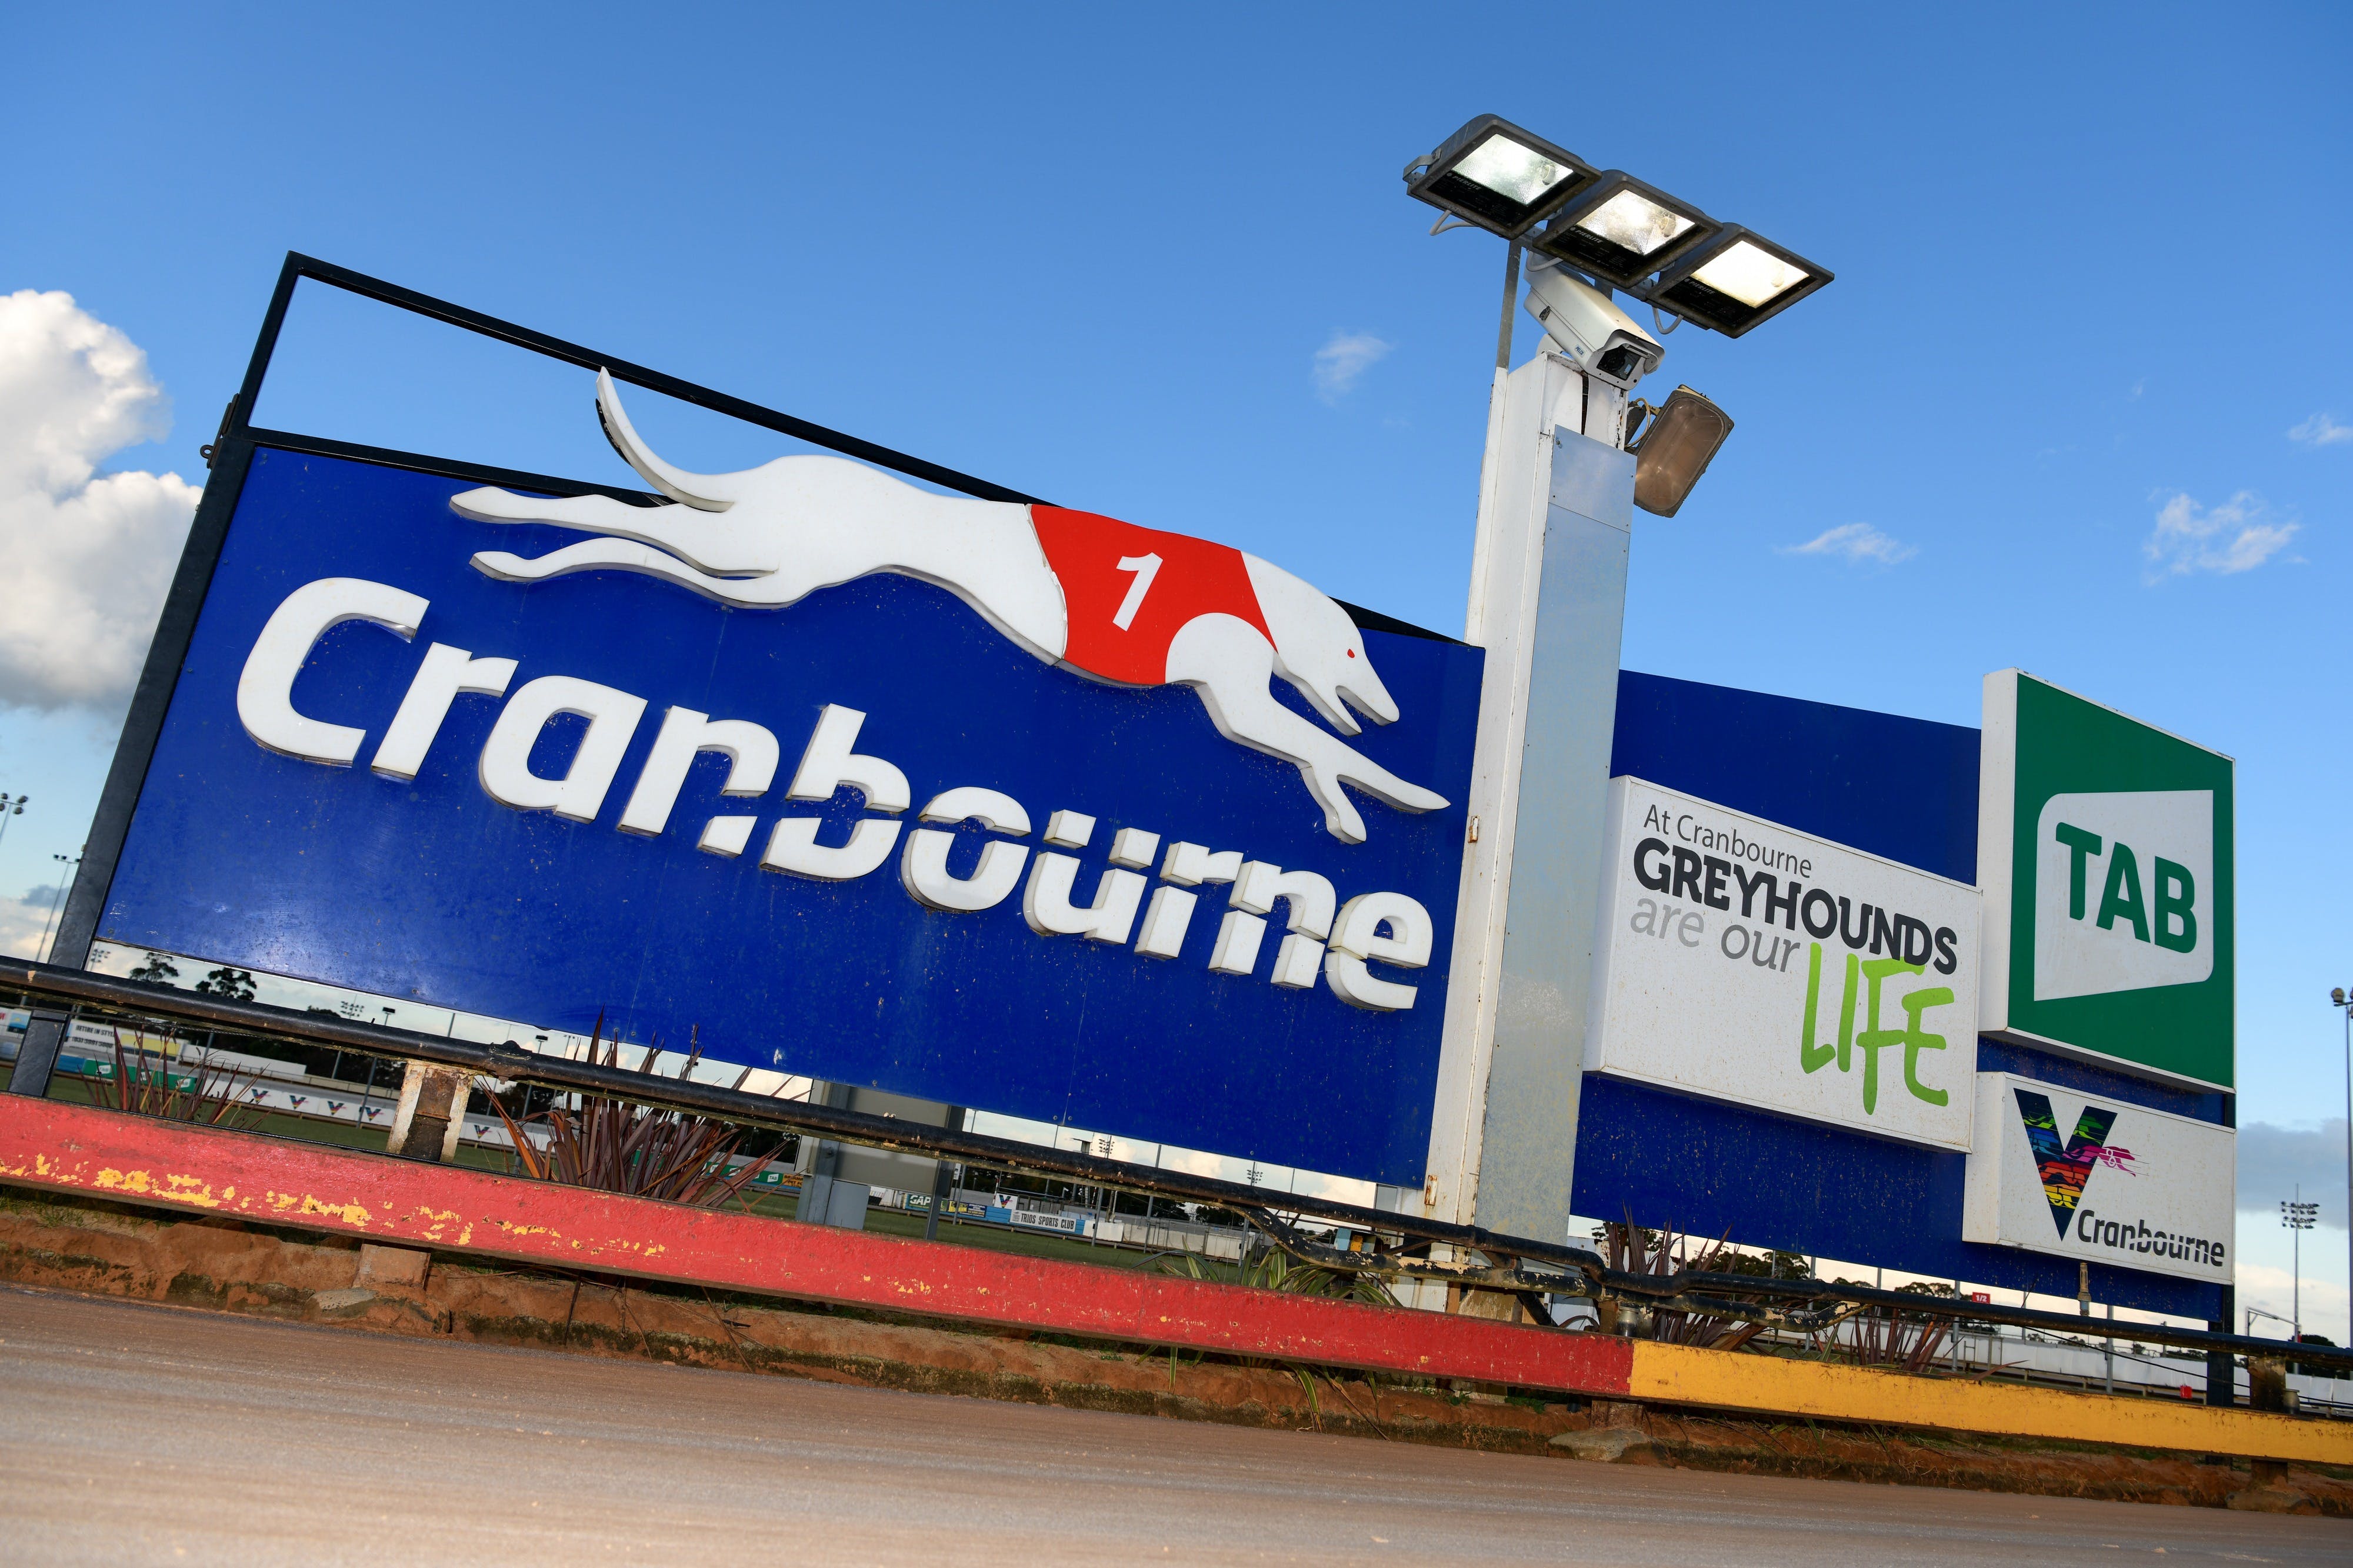 Cranbourne Greyhound Racing Club - Tourism Canberra